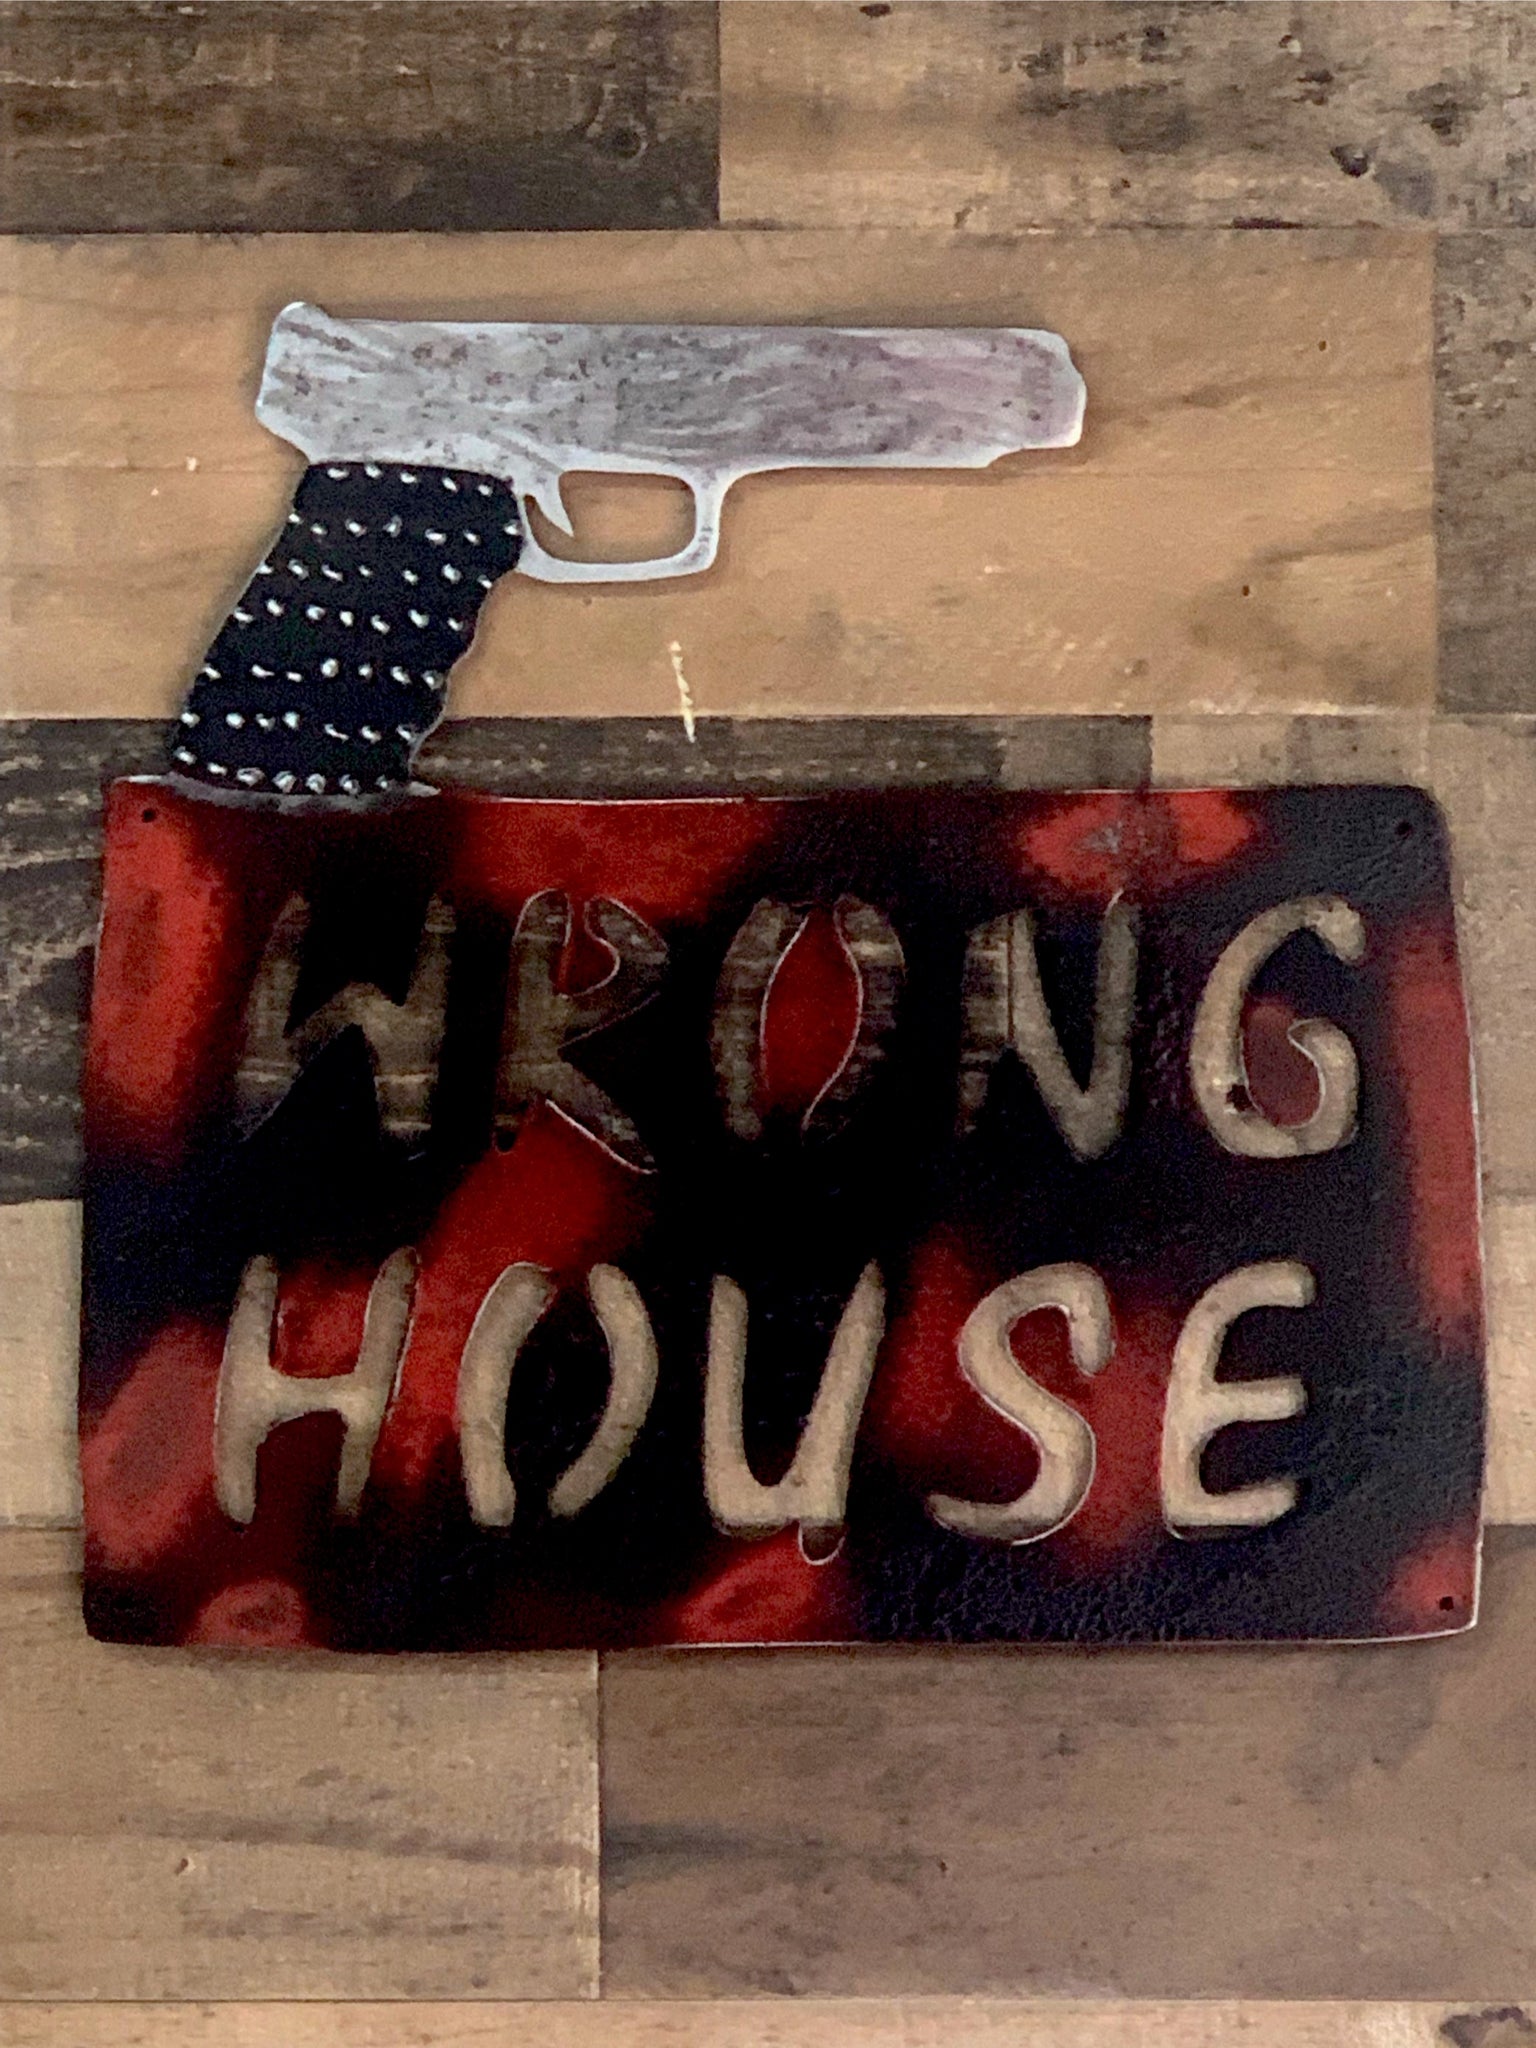 Wrong House